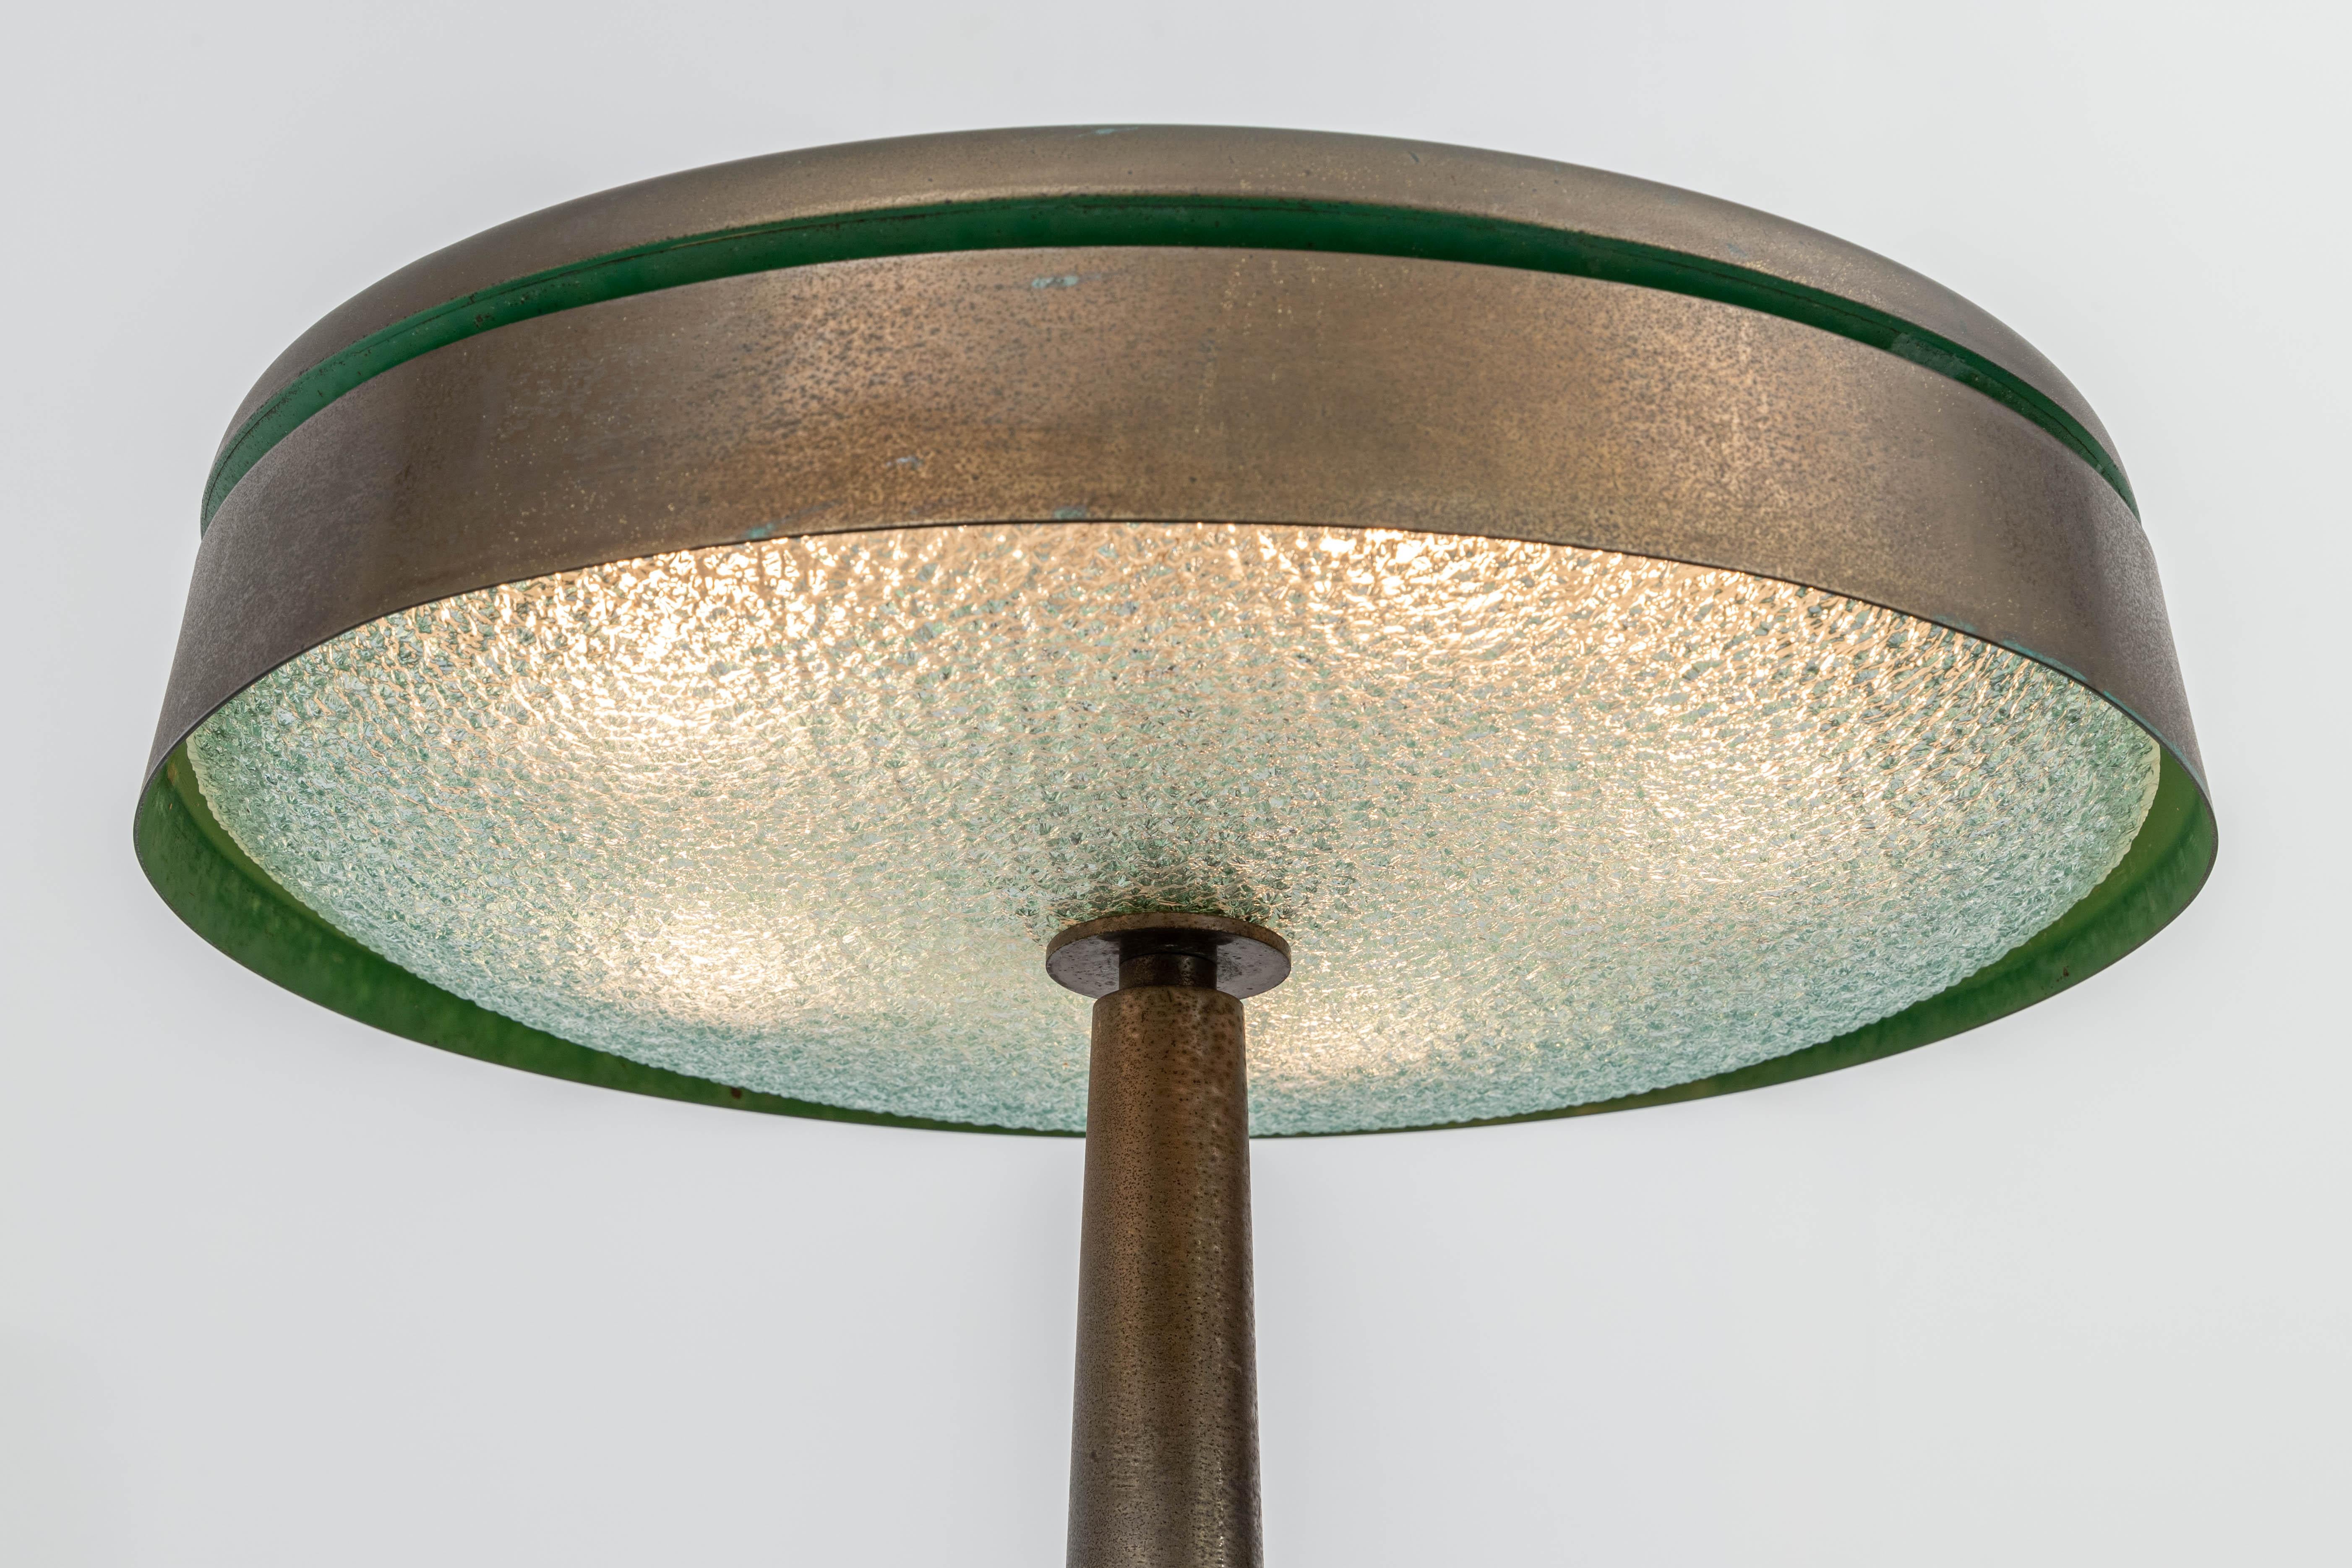 Italian Max Ingrand Table Lamp #2278 for Fontana Arte, Italy, 1960 For Sale